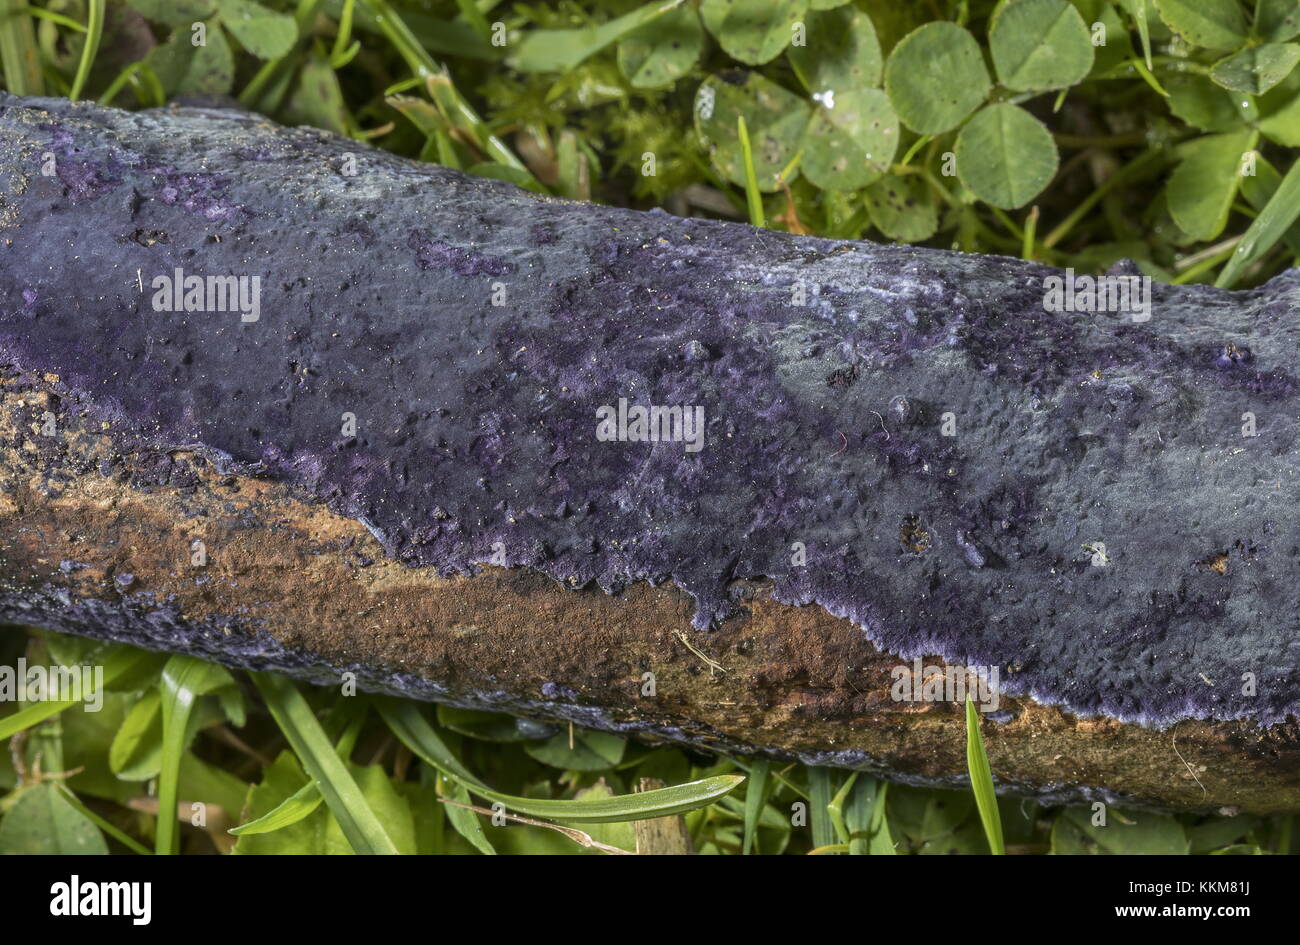 Cobalt Crust, Terana caerulea, on branch of domestic plum, Dorset. Stock Photo